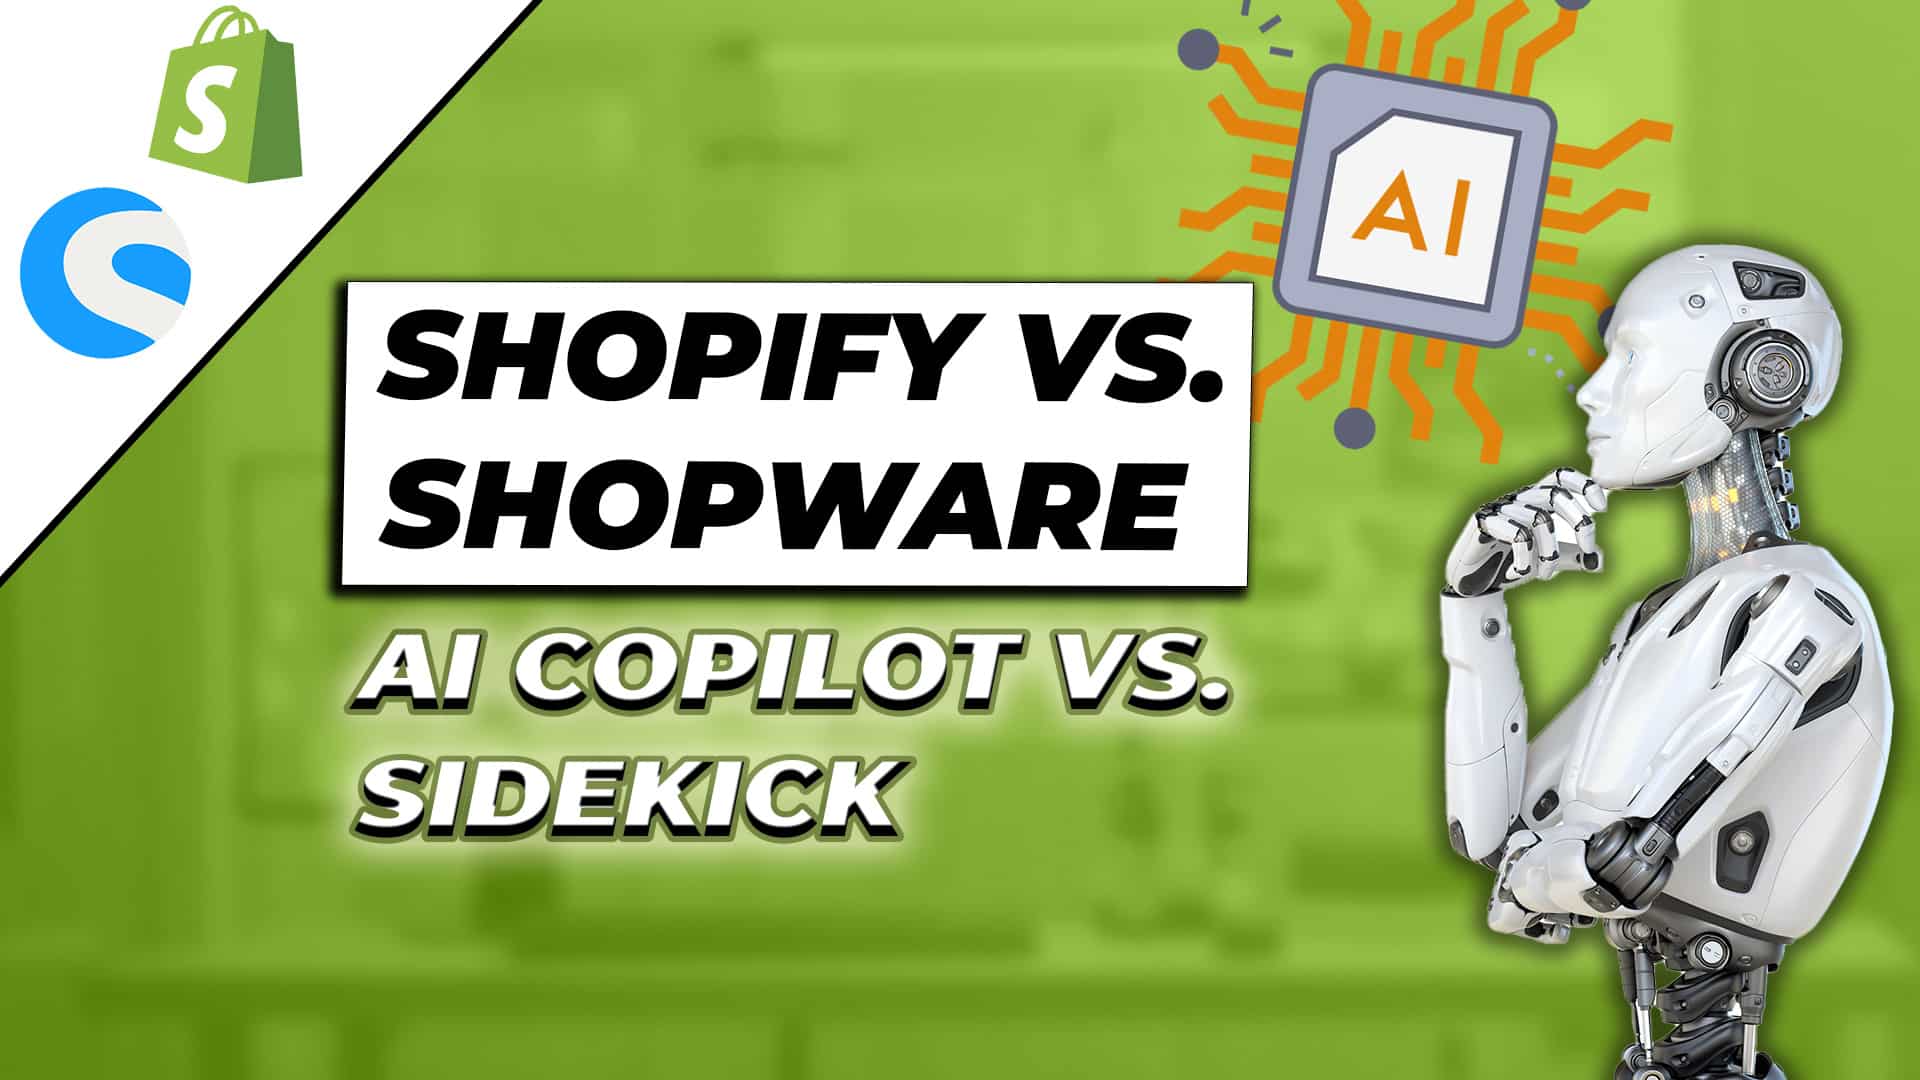 Shopware AI Copilot vs. Shopify Sidekick im Vergleich